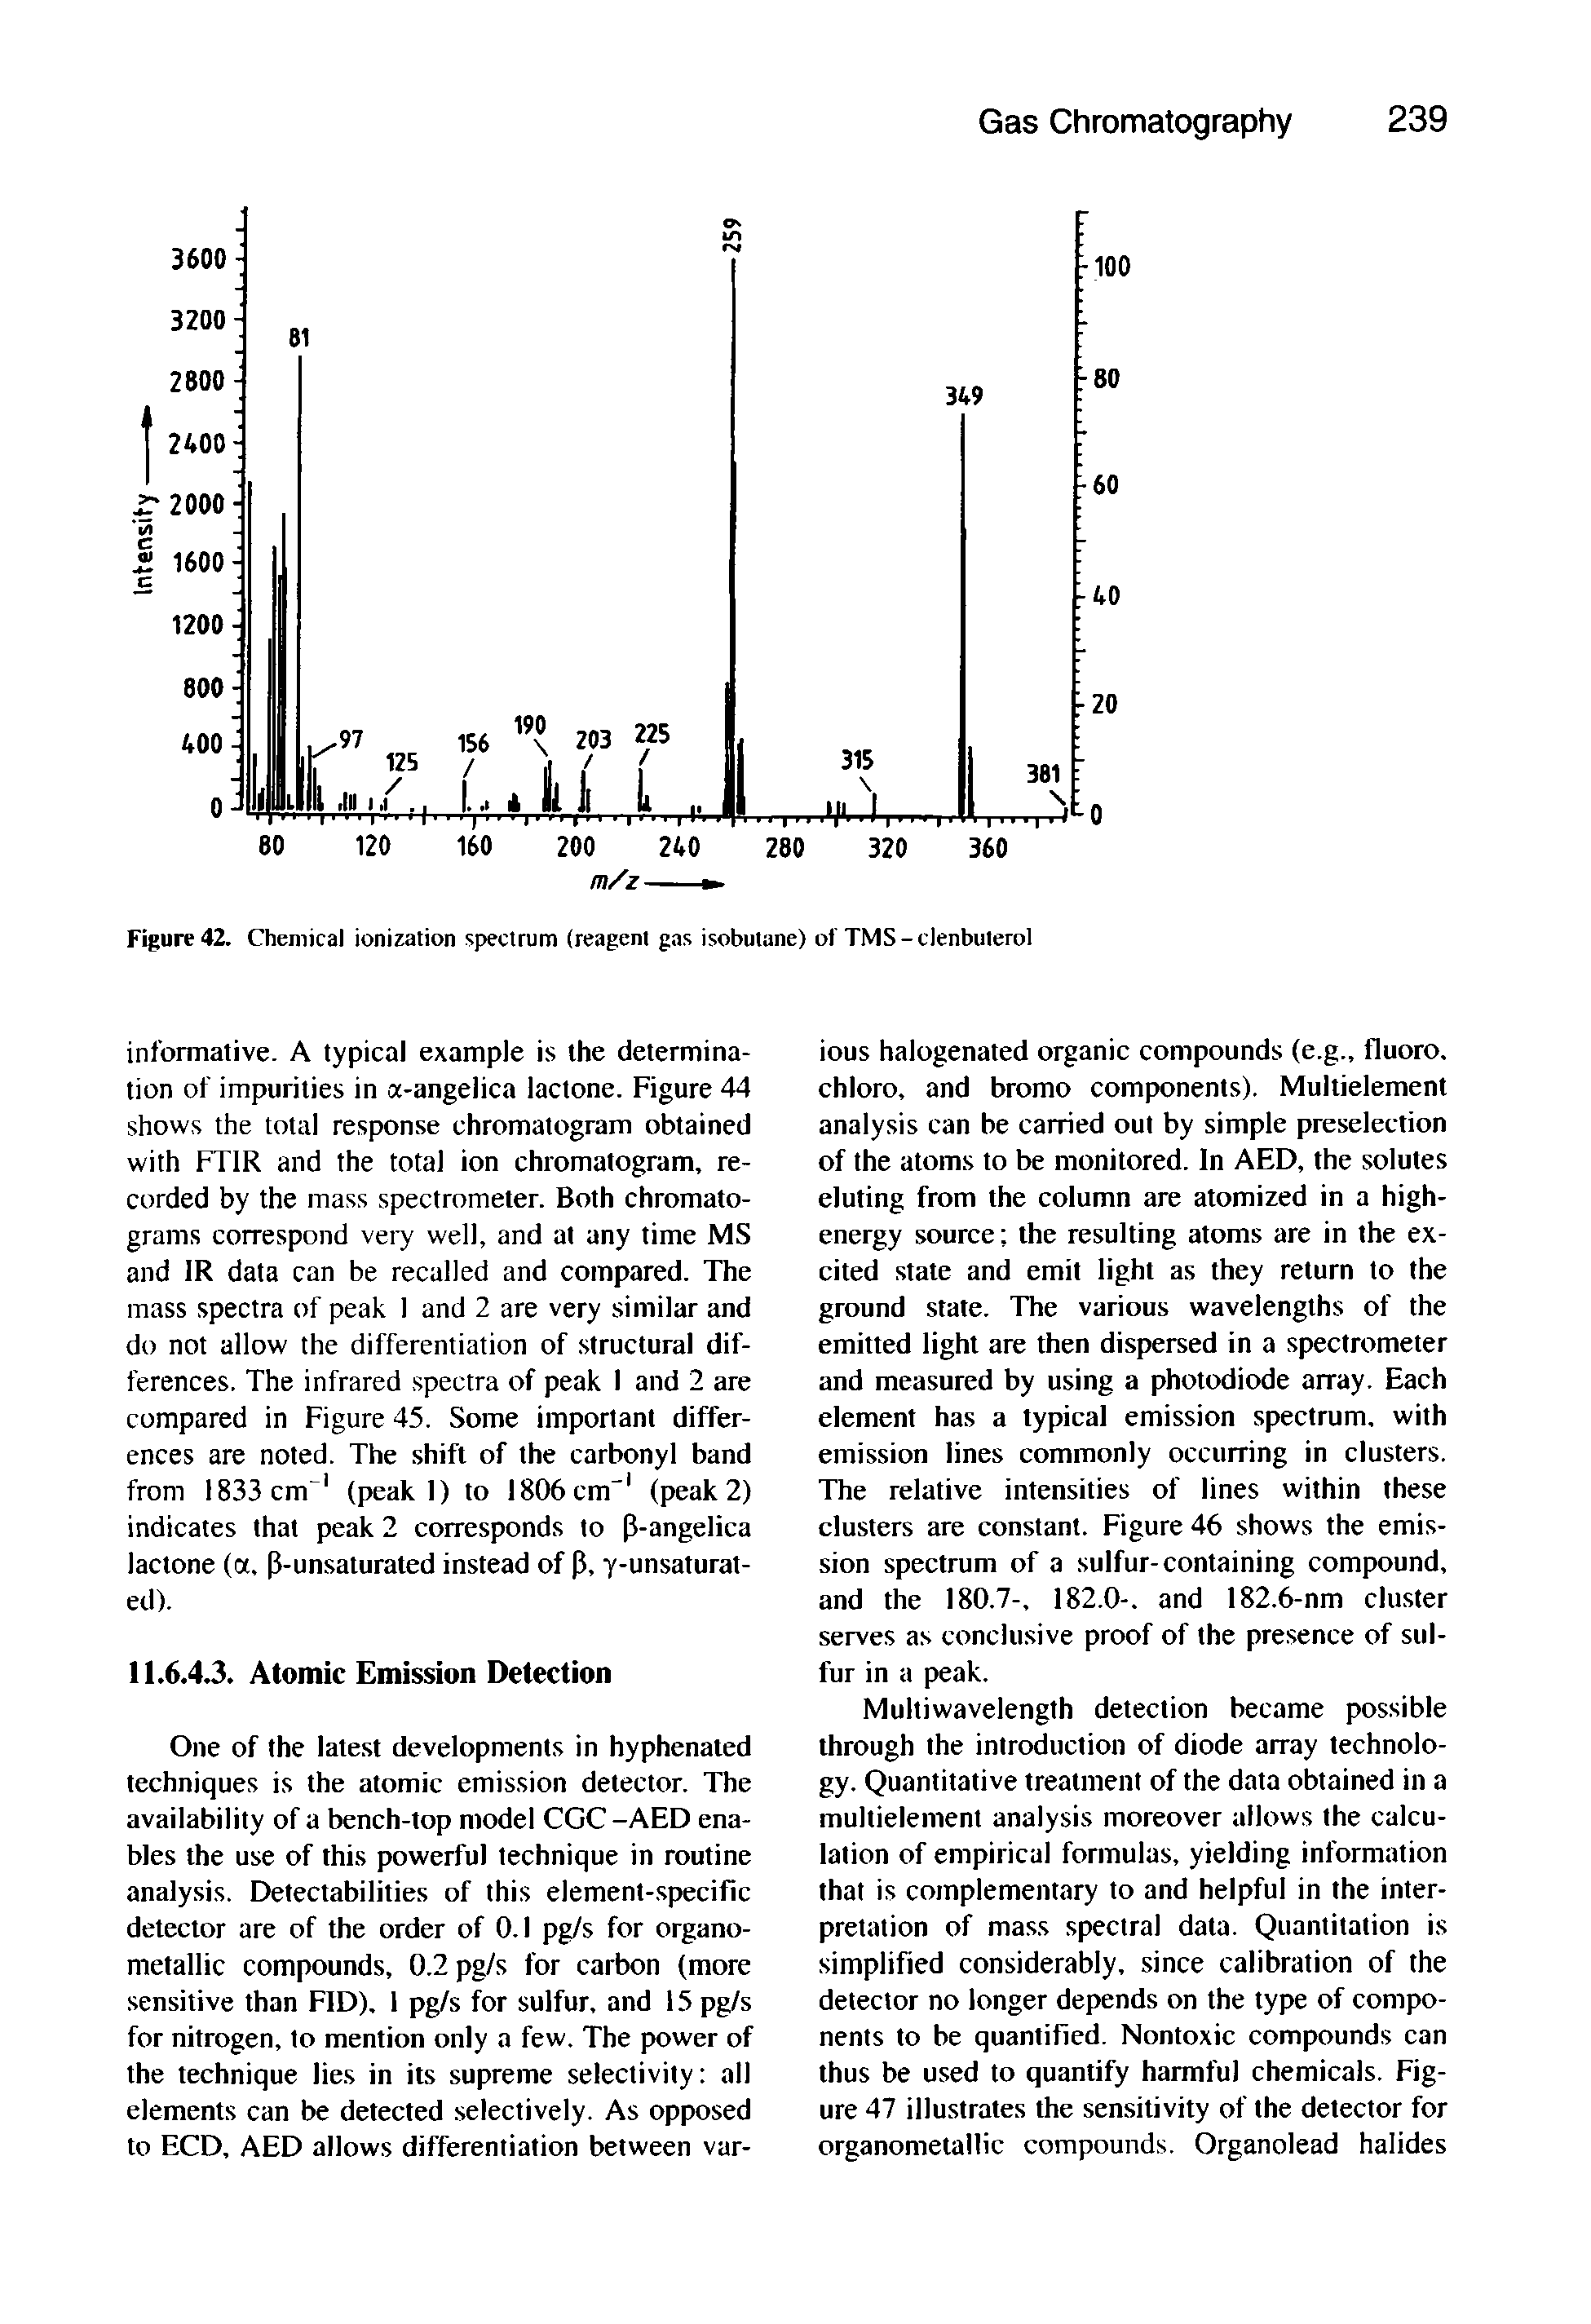 Figure 42. Chemical ionization spectrum (reagent gas isobutane) of TMS-clenbulerol...